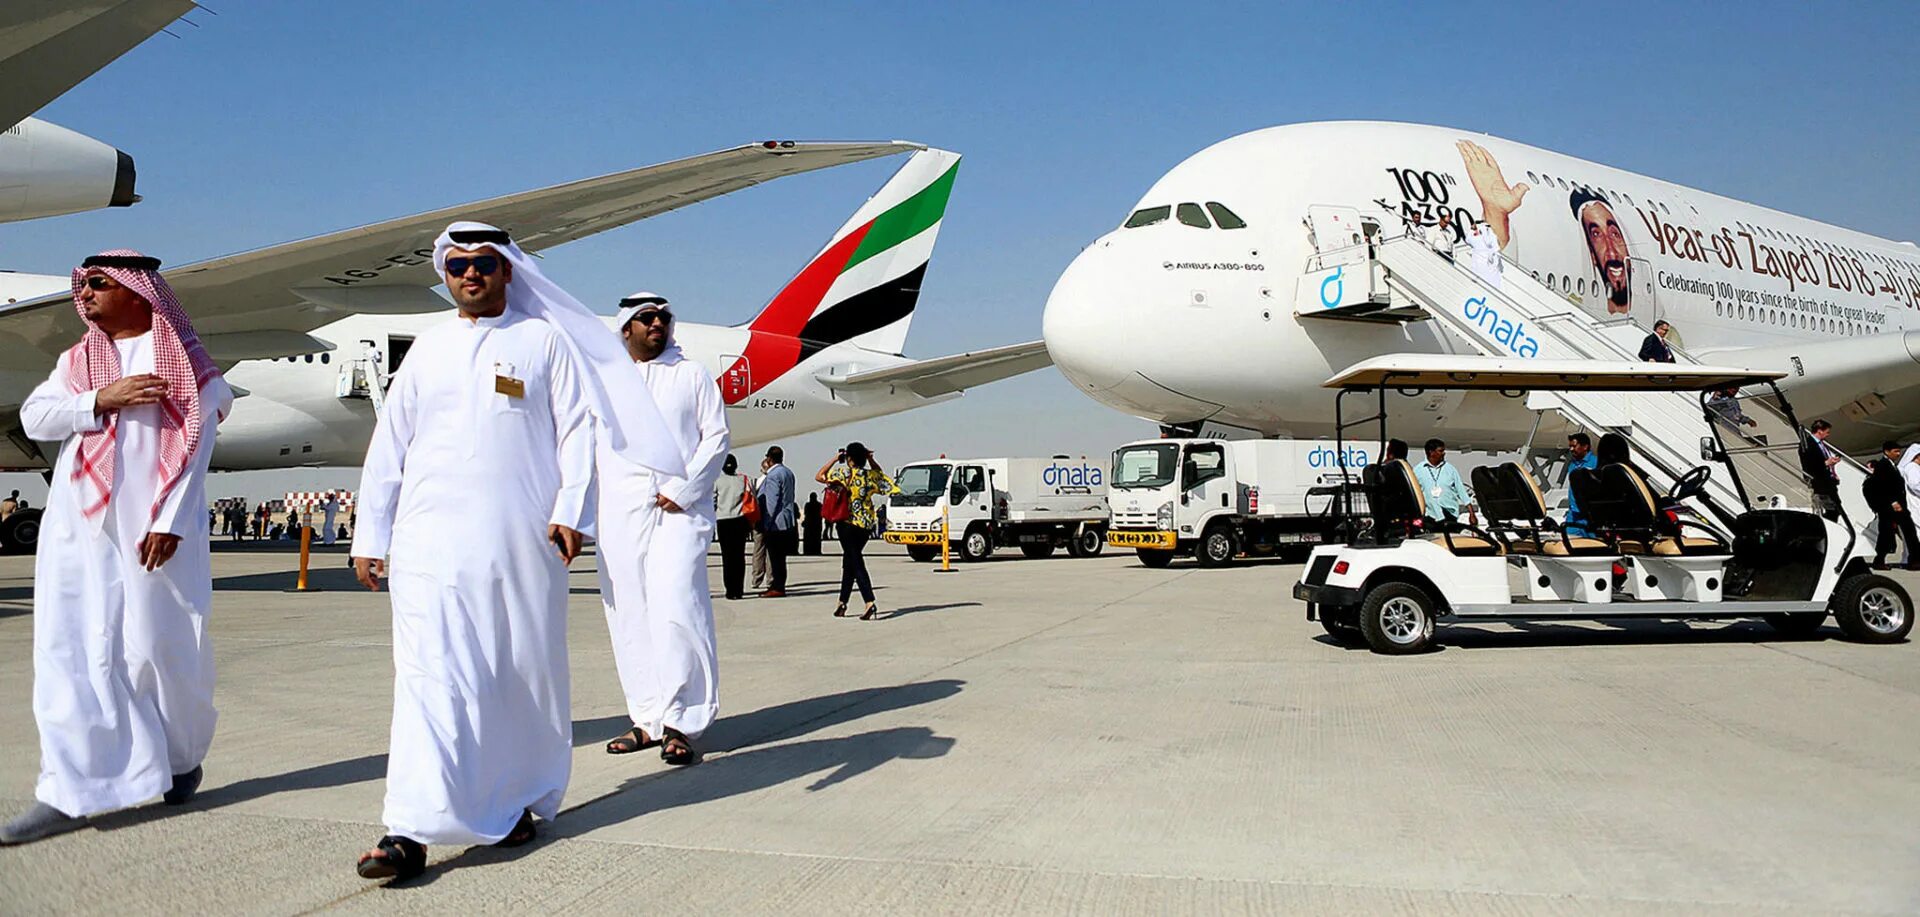 Авиакомпания Дубай Эмирейтс. Аэропорт Эмирейтс в Дубае. Самолет Дубай Эмирейтс. Emirates Airlines авиакомпании ОАЭ. Uae company